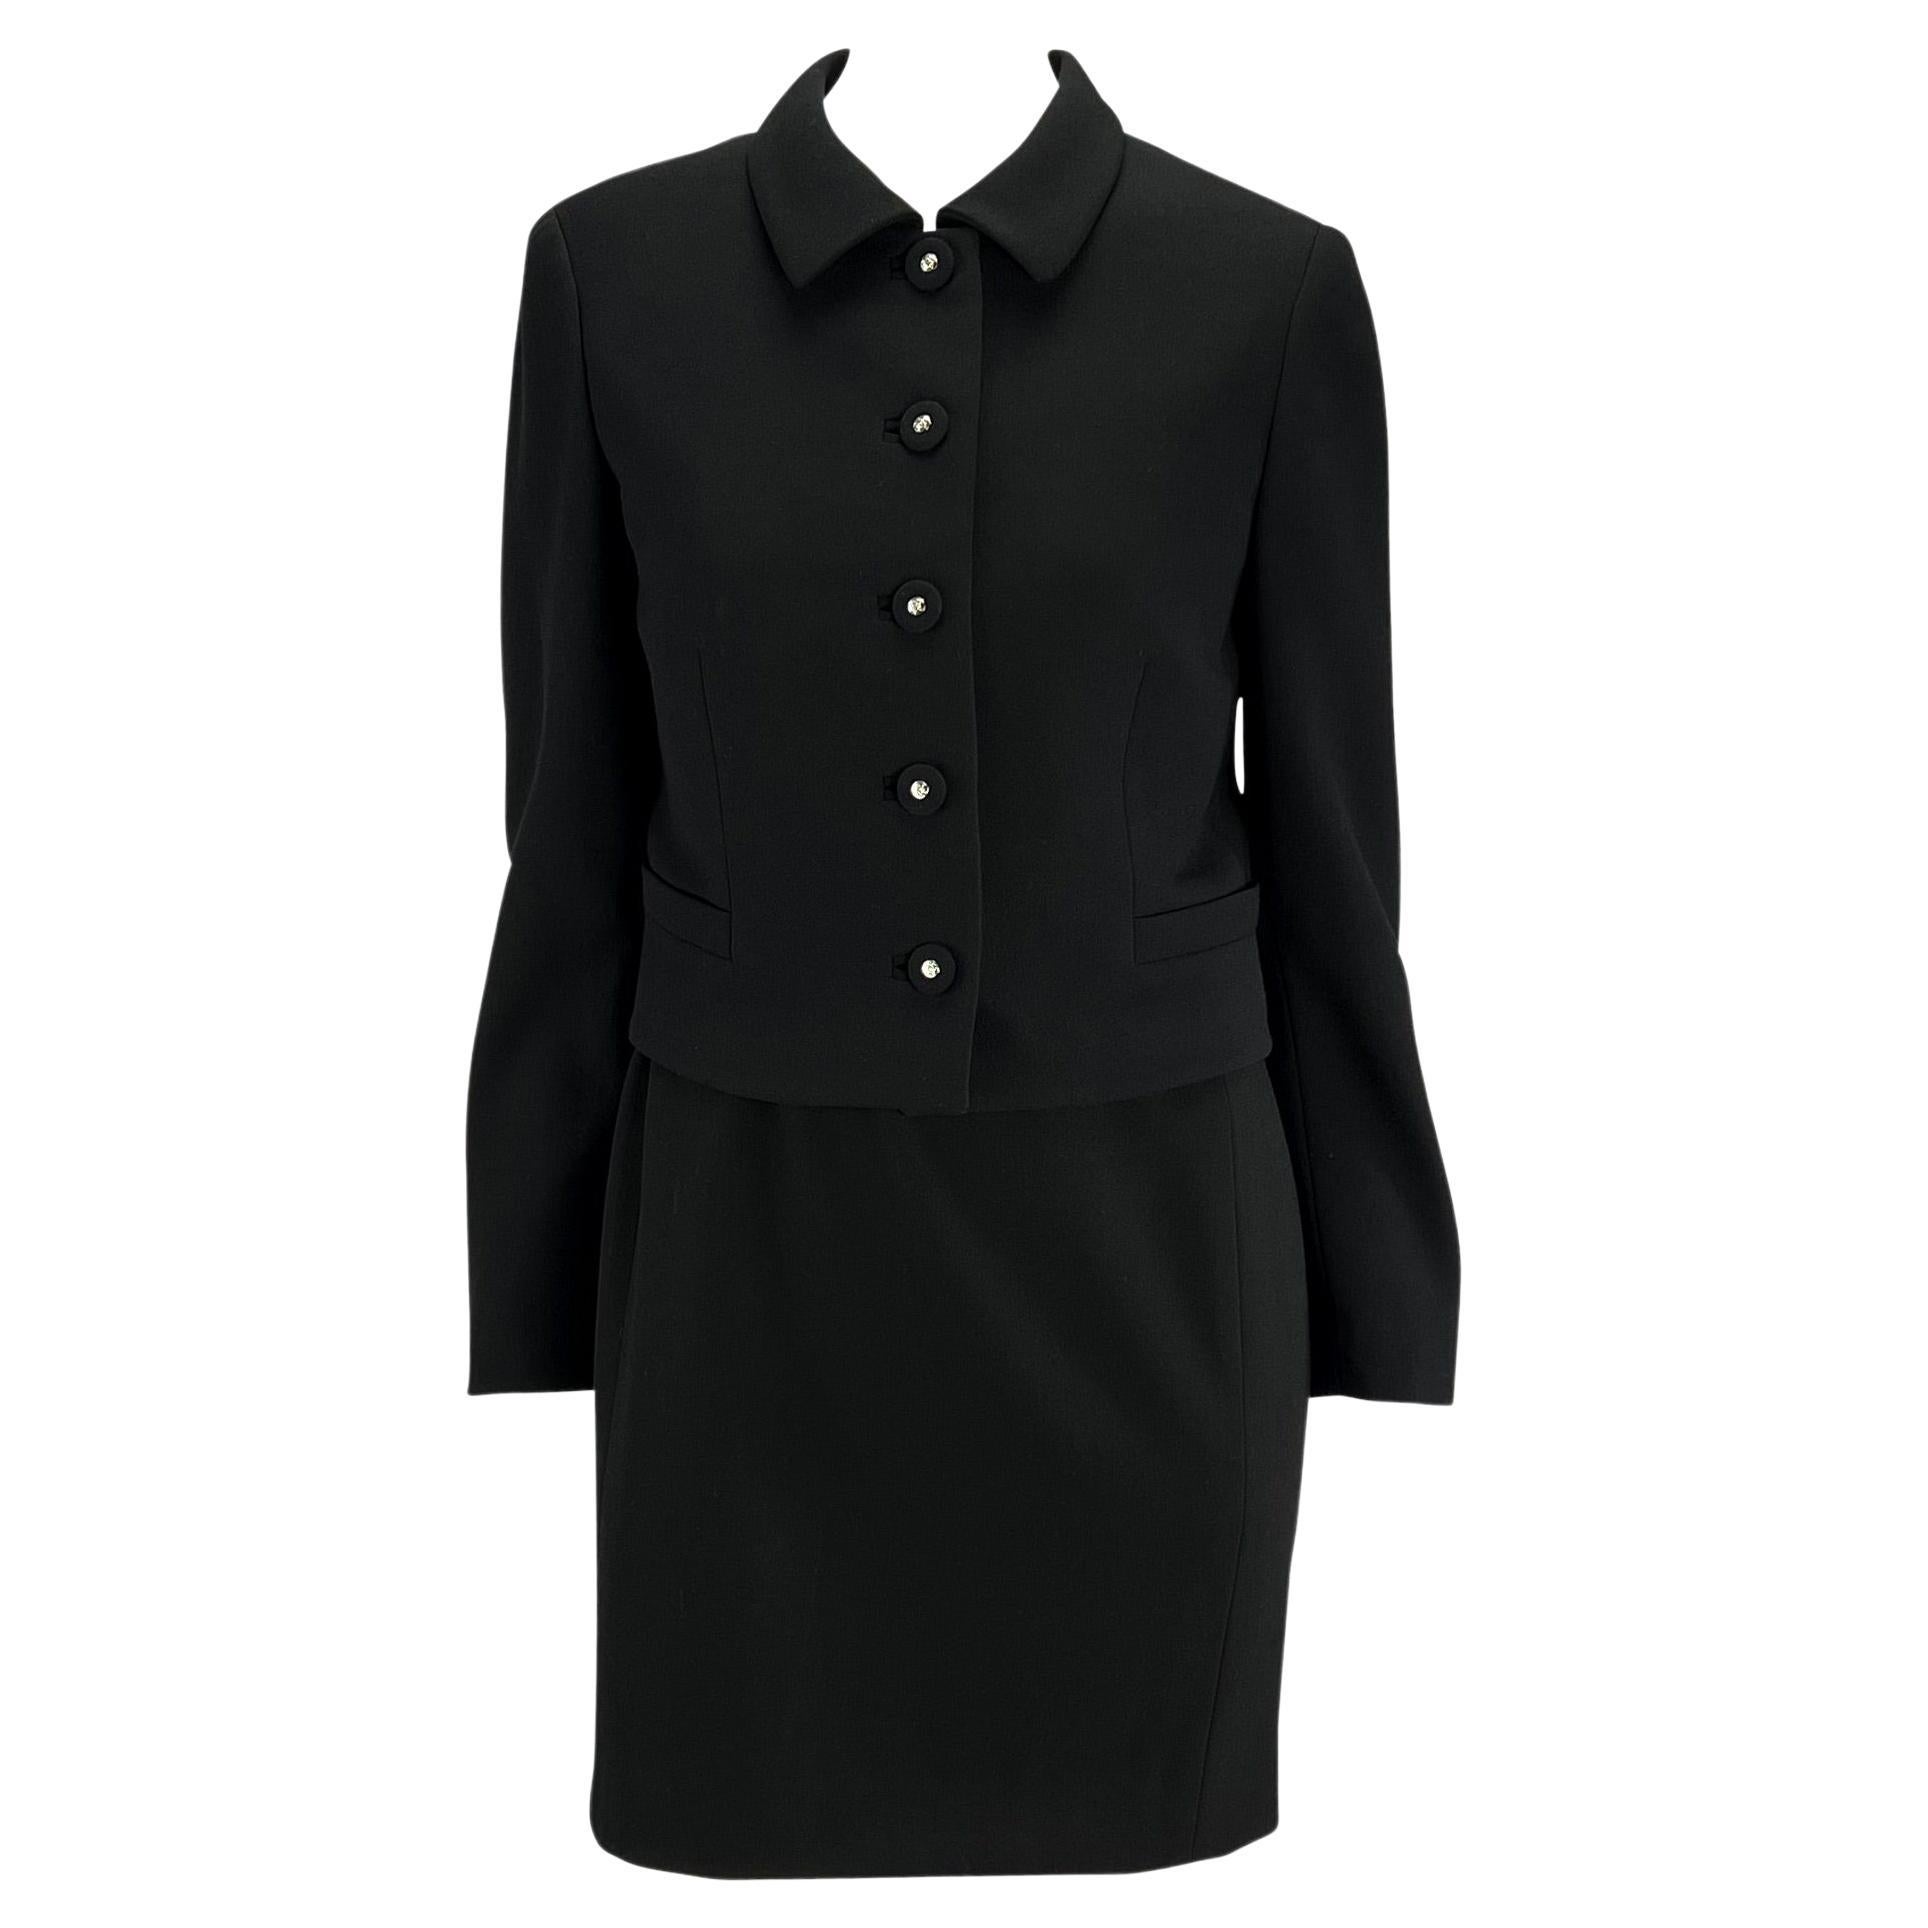 S/S 1996 Gianni Versace Couture Black Wool Medusa Button Dress Jacket Set For Sale